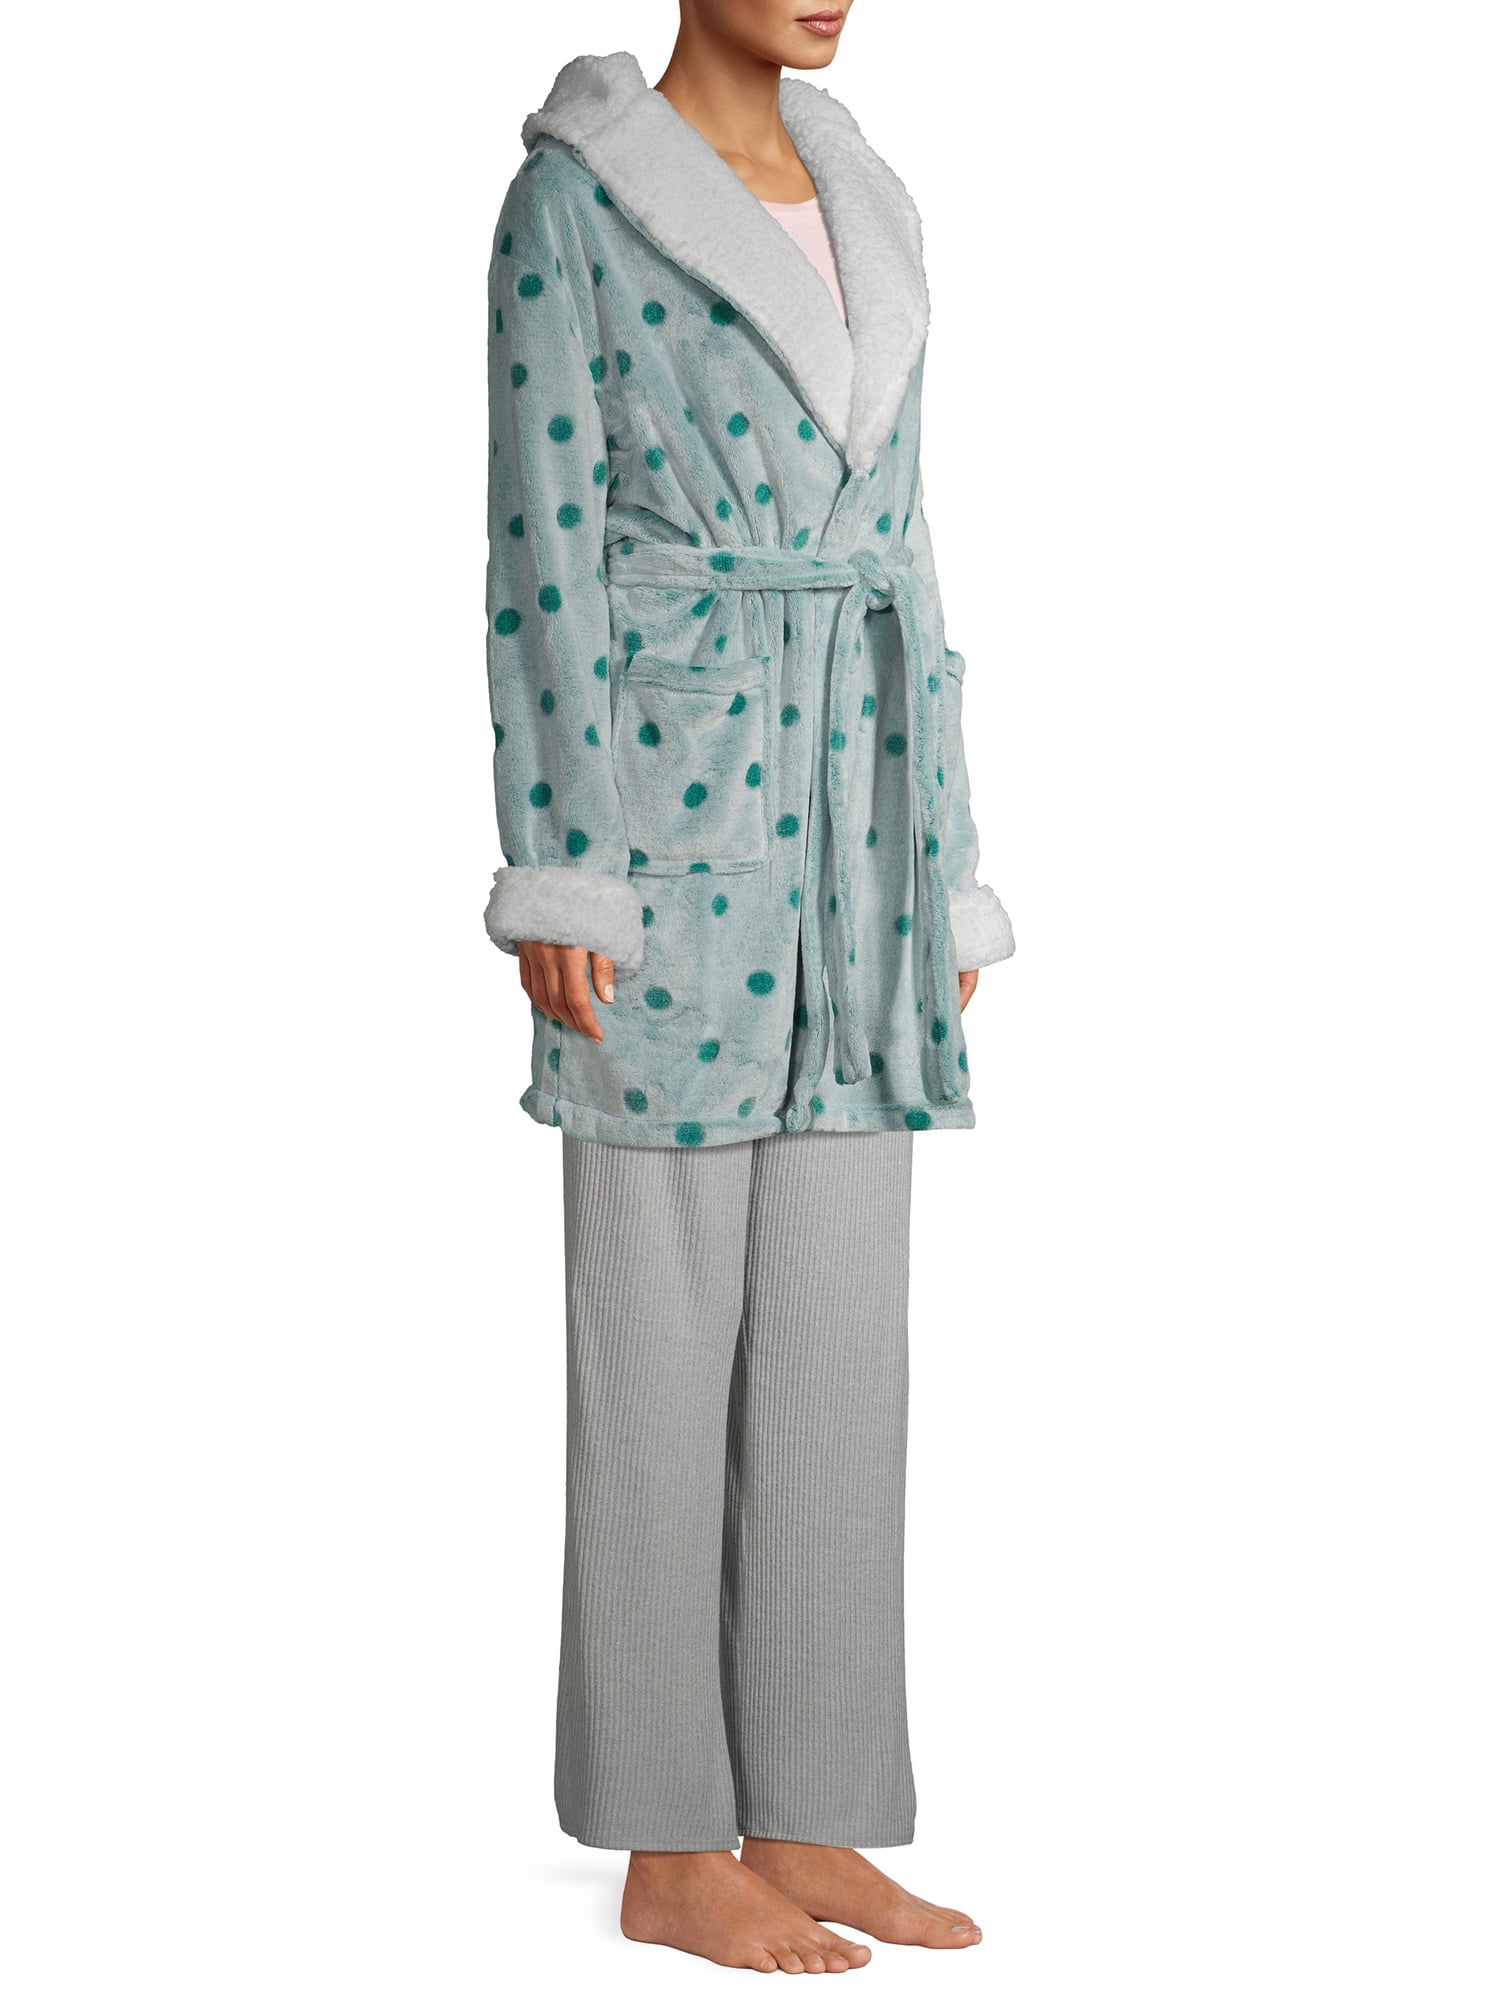 GIRLS ONE-PIECE LOL Hooded Pyjamas/Bodysuit?/Dressing Gown? by Tesco Age  7/8yrs £6.00 - PicClick UK